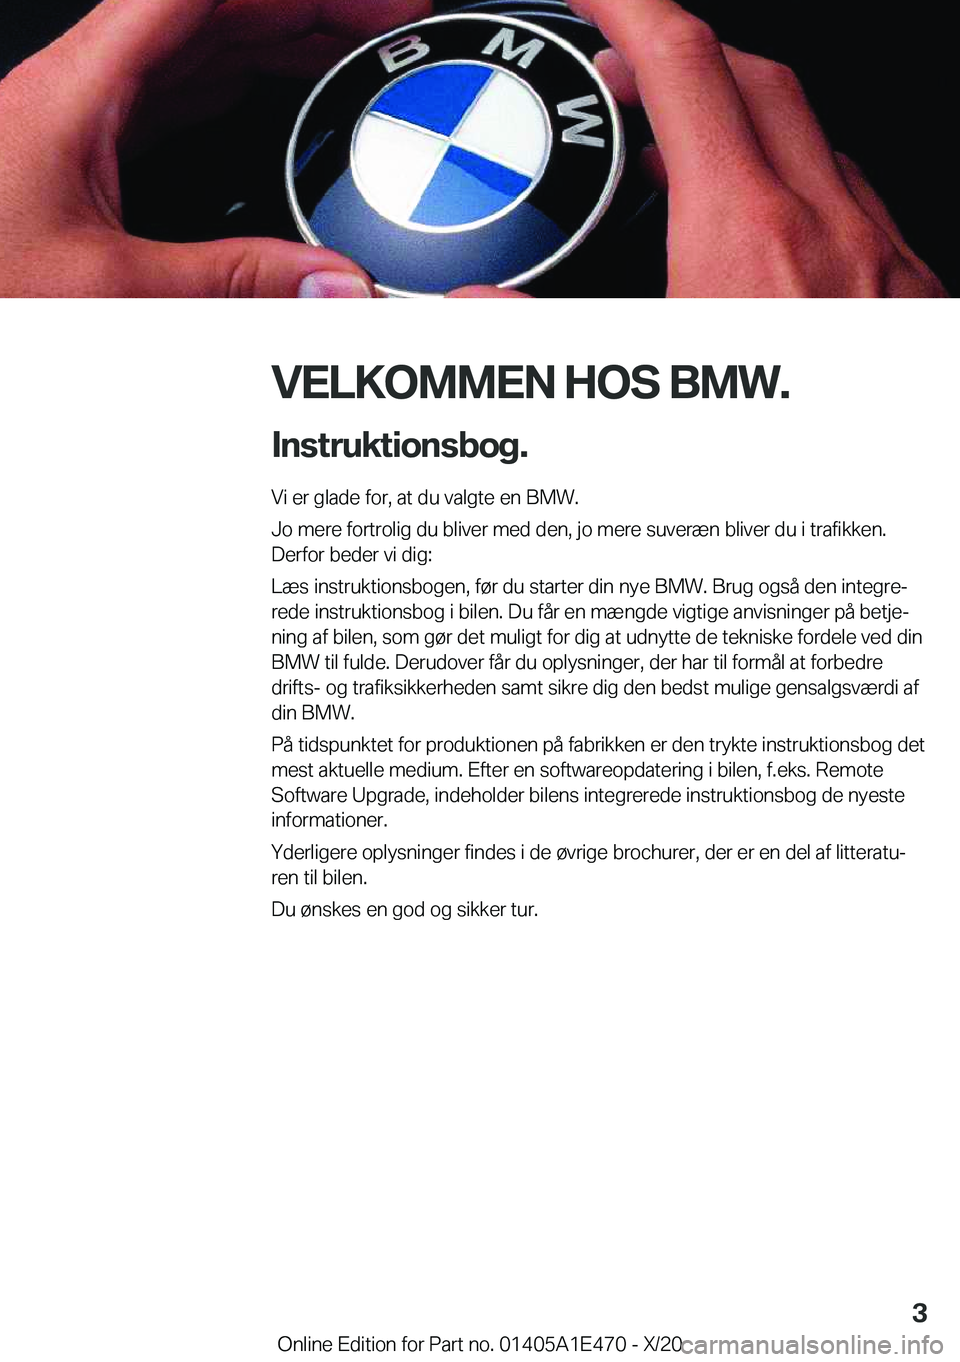 BMW M3 2021  InstruktionsbØger (in Danish) �V�E�L�K�O�M�M�E�N��H�O�S��B�M�W�.
�I�n�s�t�r�u�k�t�i�o�n�s�b�o�g�. �V�i��e�r��g�l�a�d�e��f�o�r�,��a�t��d�u��v�a�l�g�t�e��e�n��B�M�W�.
�J�o��m�e�r�e��f�o�r�t�r�o�l�i�g��d�u��b�l�i�v�e�r�